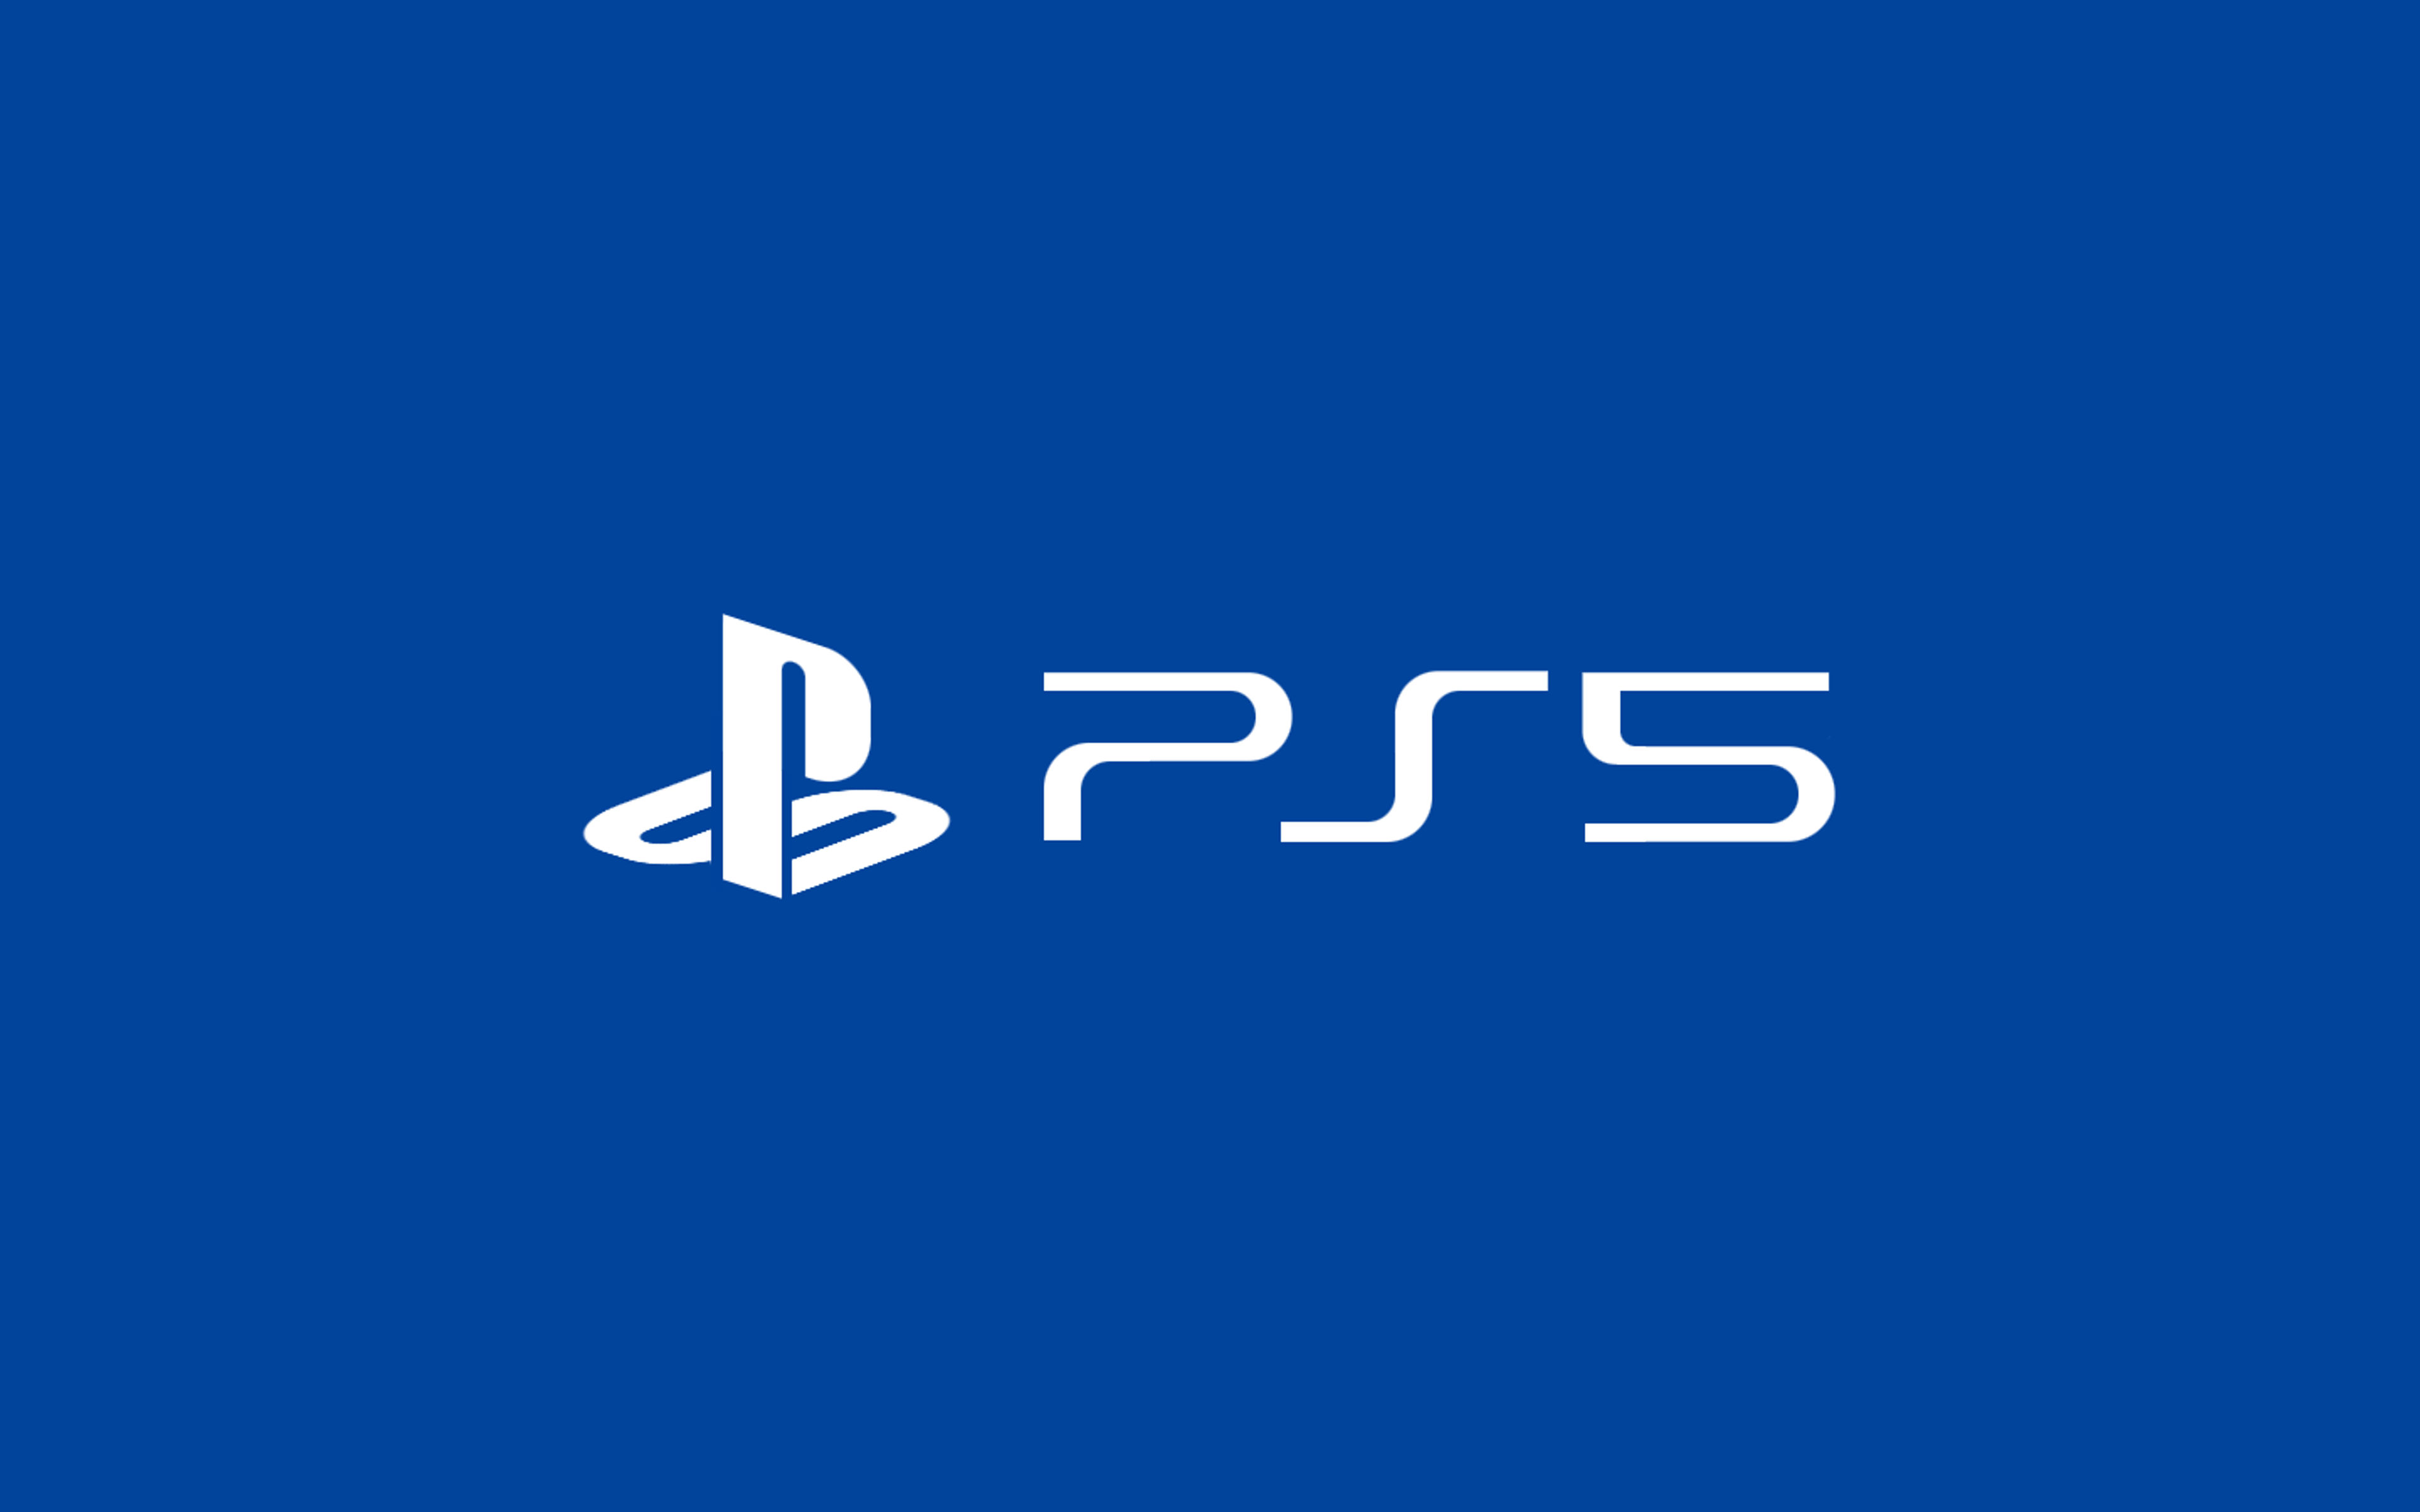 PS5 Logo image